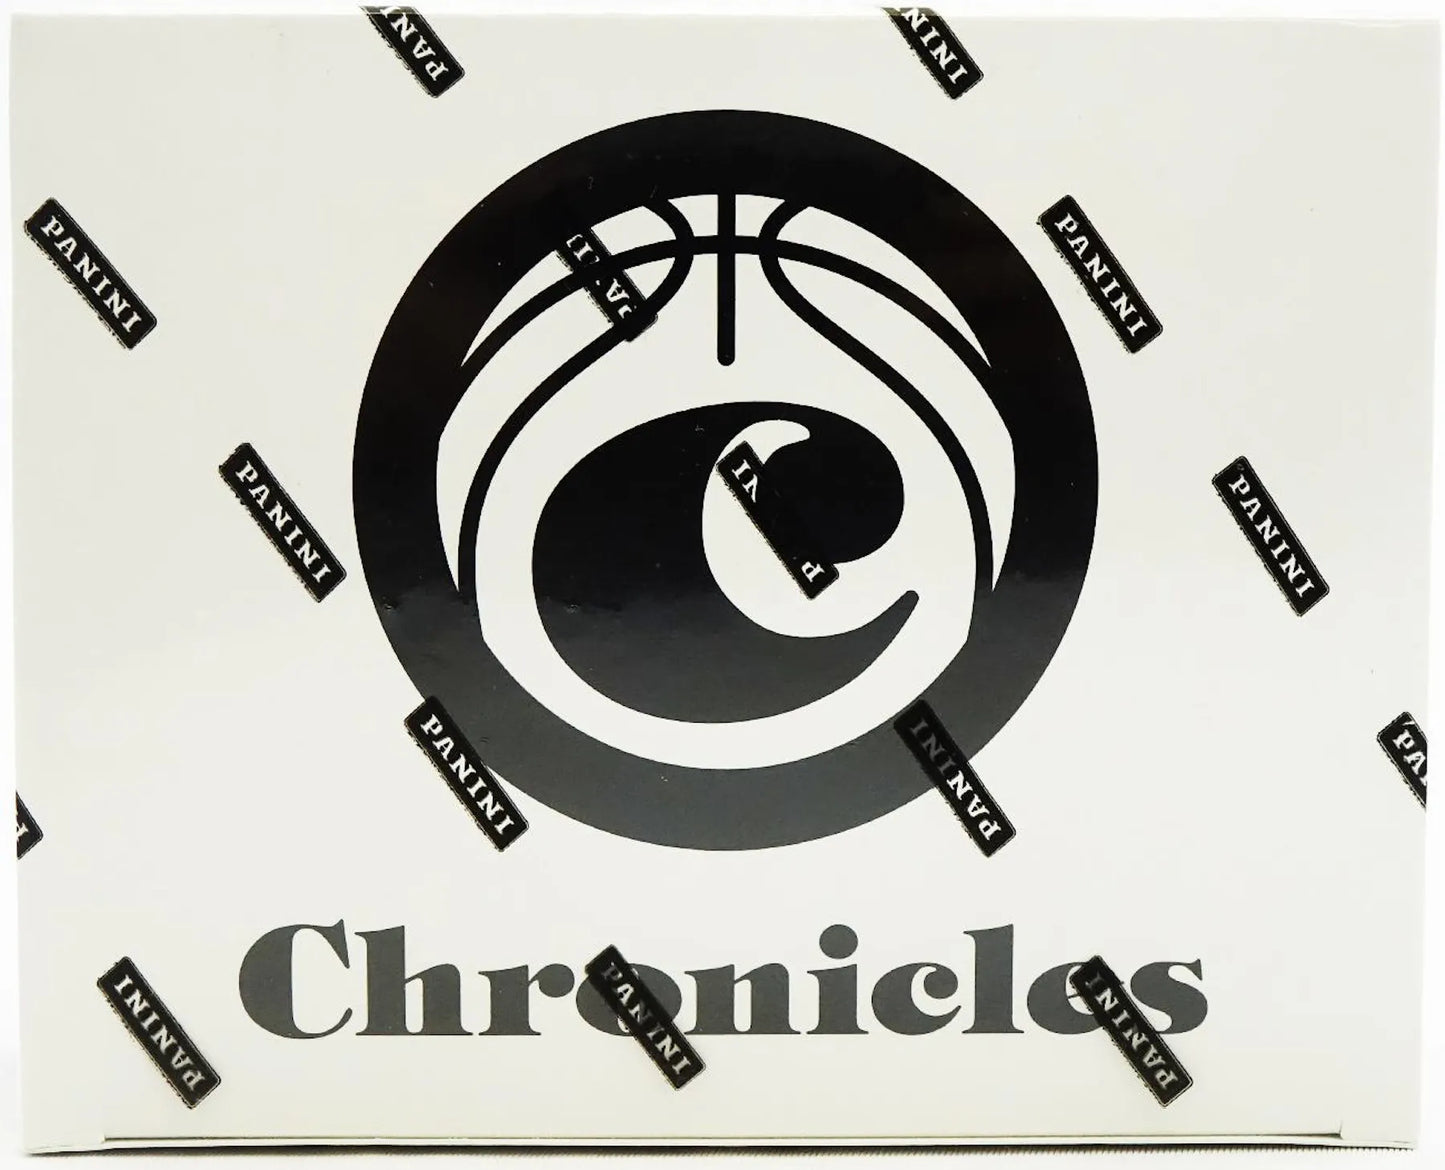 2019/20 Panini Chronicles Basketball Jumbo Value 12-Pack Box